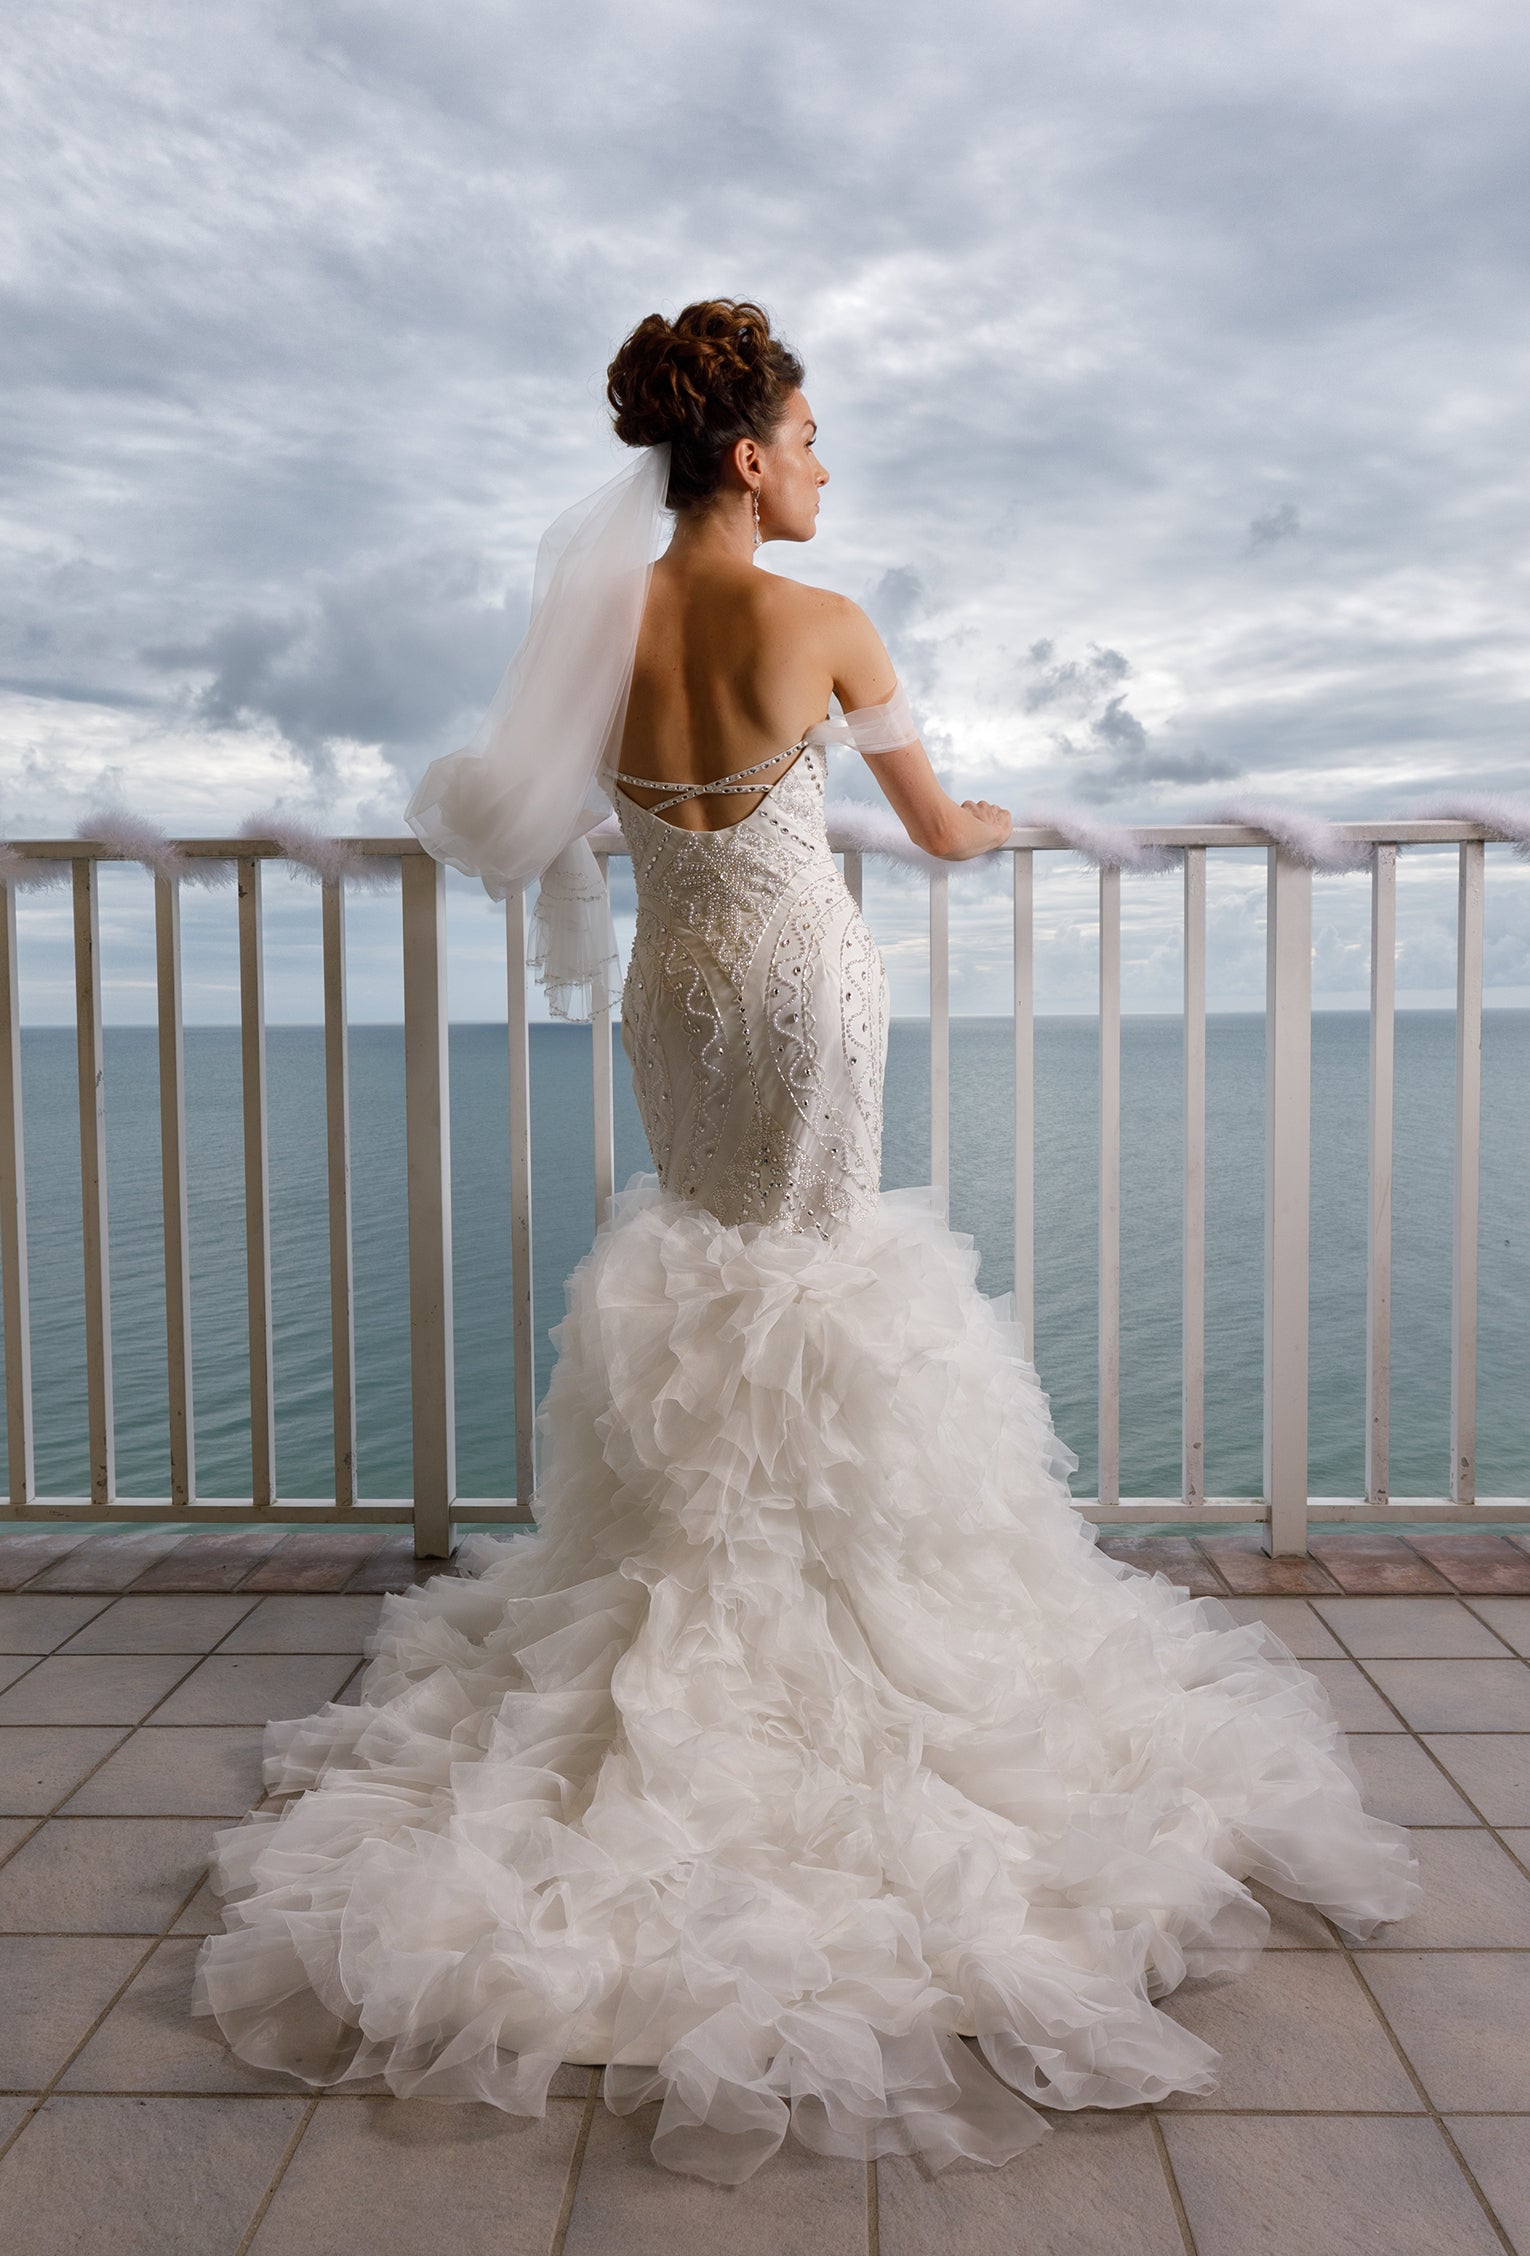 Friday Favorite: Swarovski Crystal Lace Wedding Dress